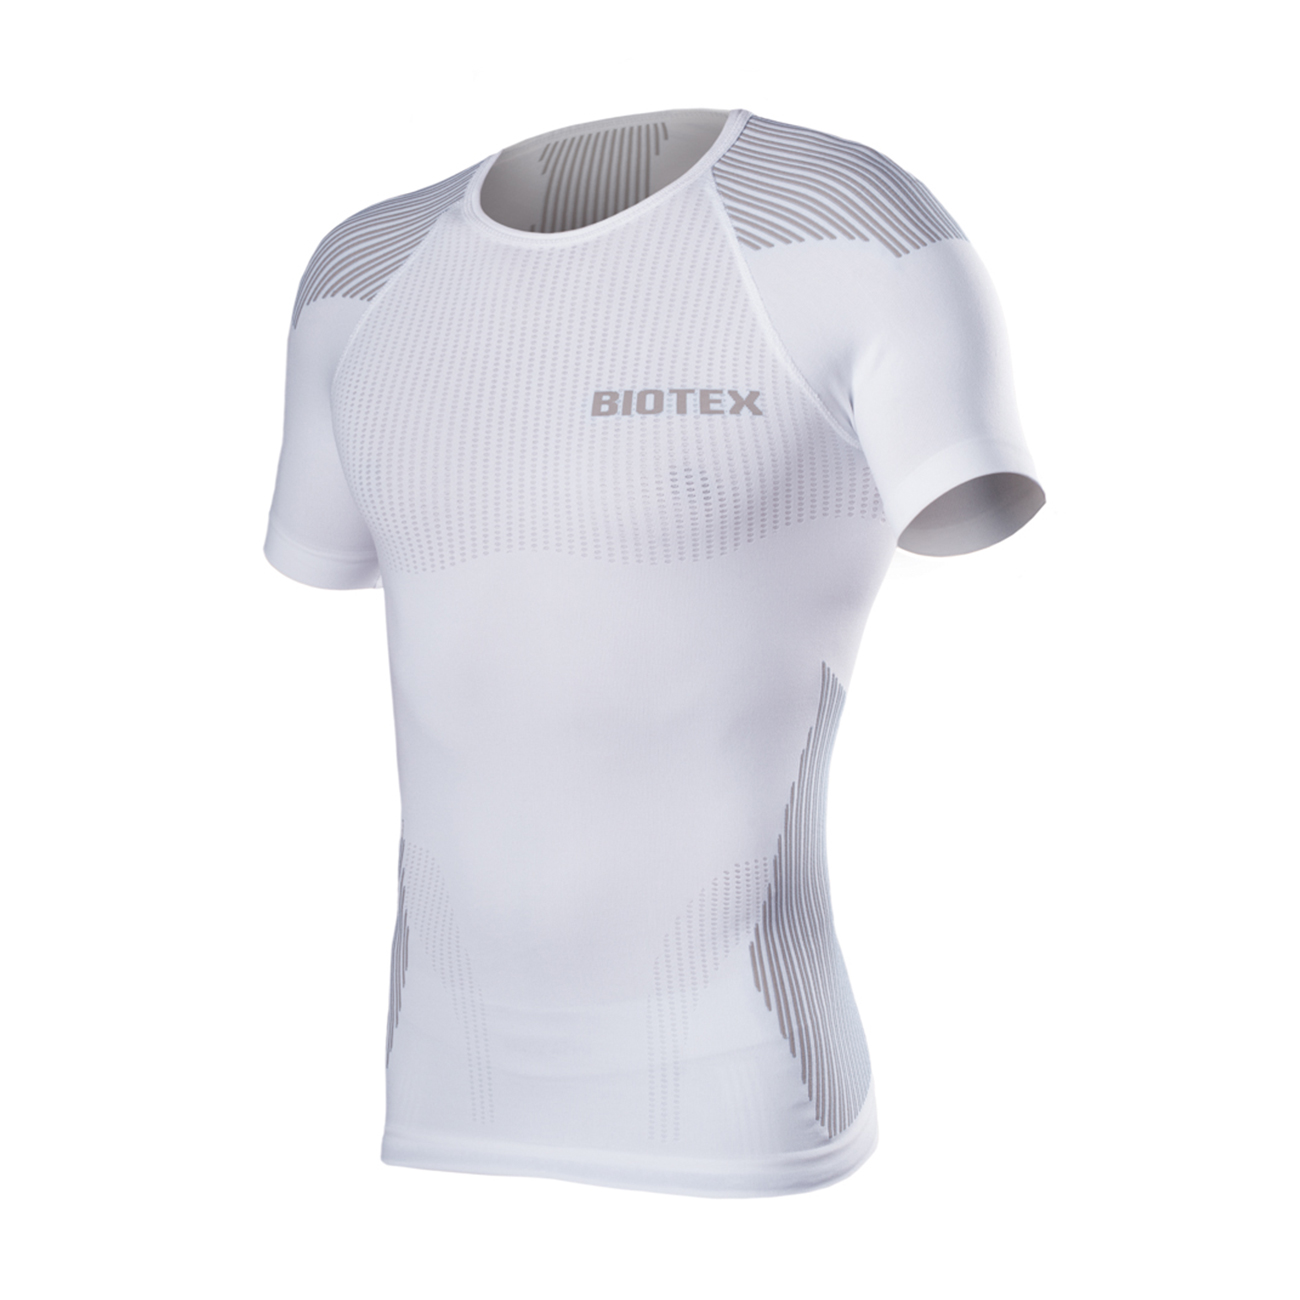 
                BIOTEX Cyklistické tričko s krátkym rukávom - BIOFLEX RAGLAN - biela/šedá XS-S
            